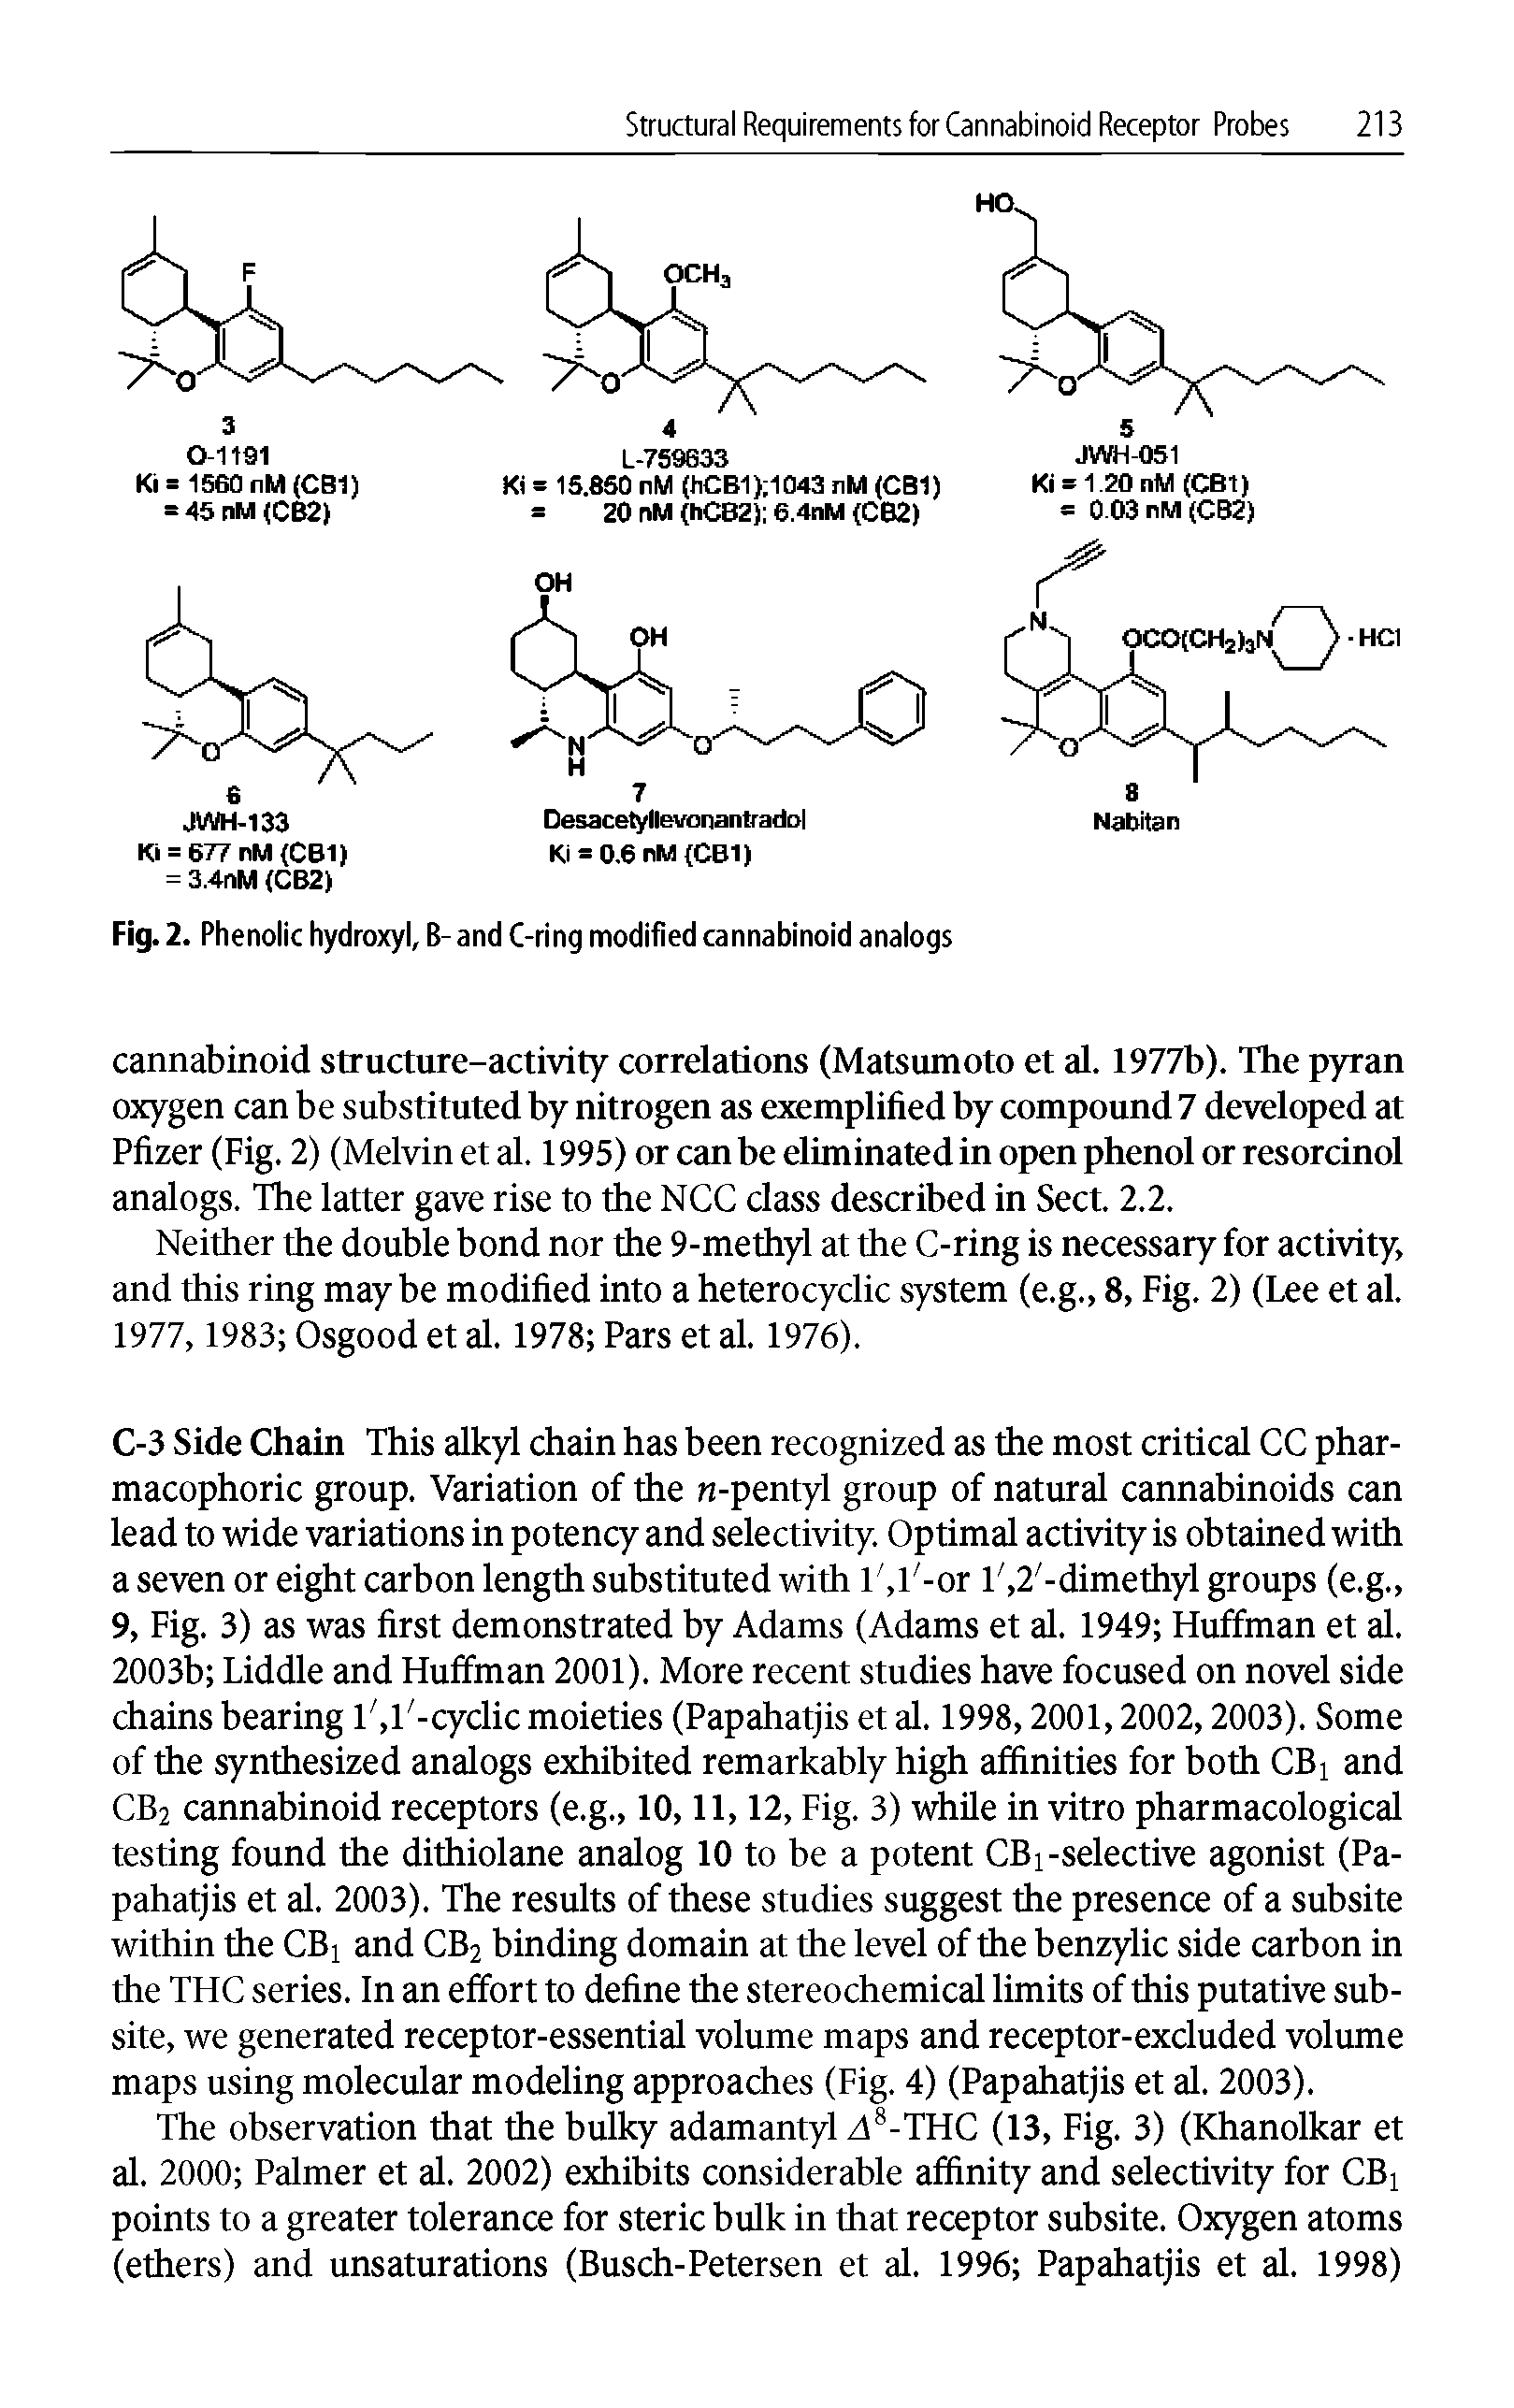 Fig. 2. Phenolic hydroxyl, B- and C-ring modified cannabinoid analogs...